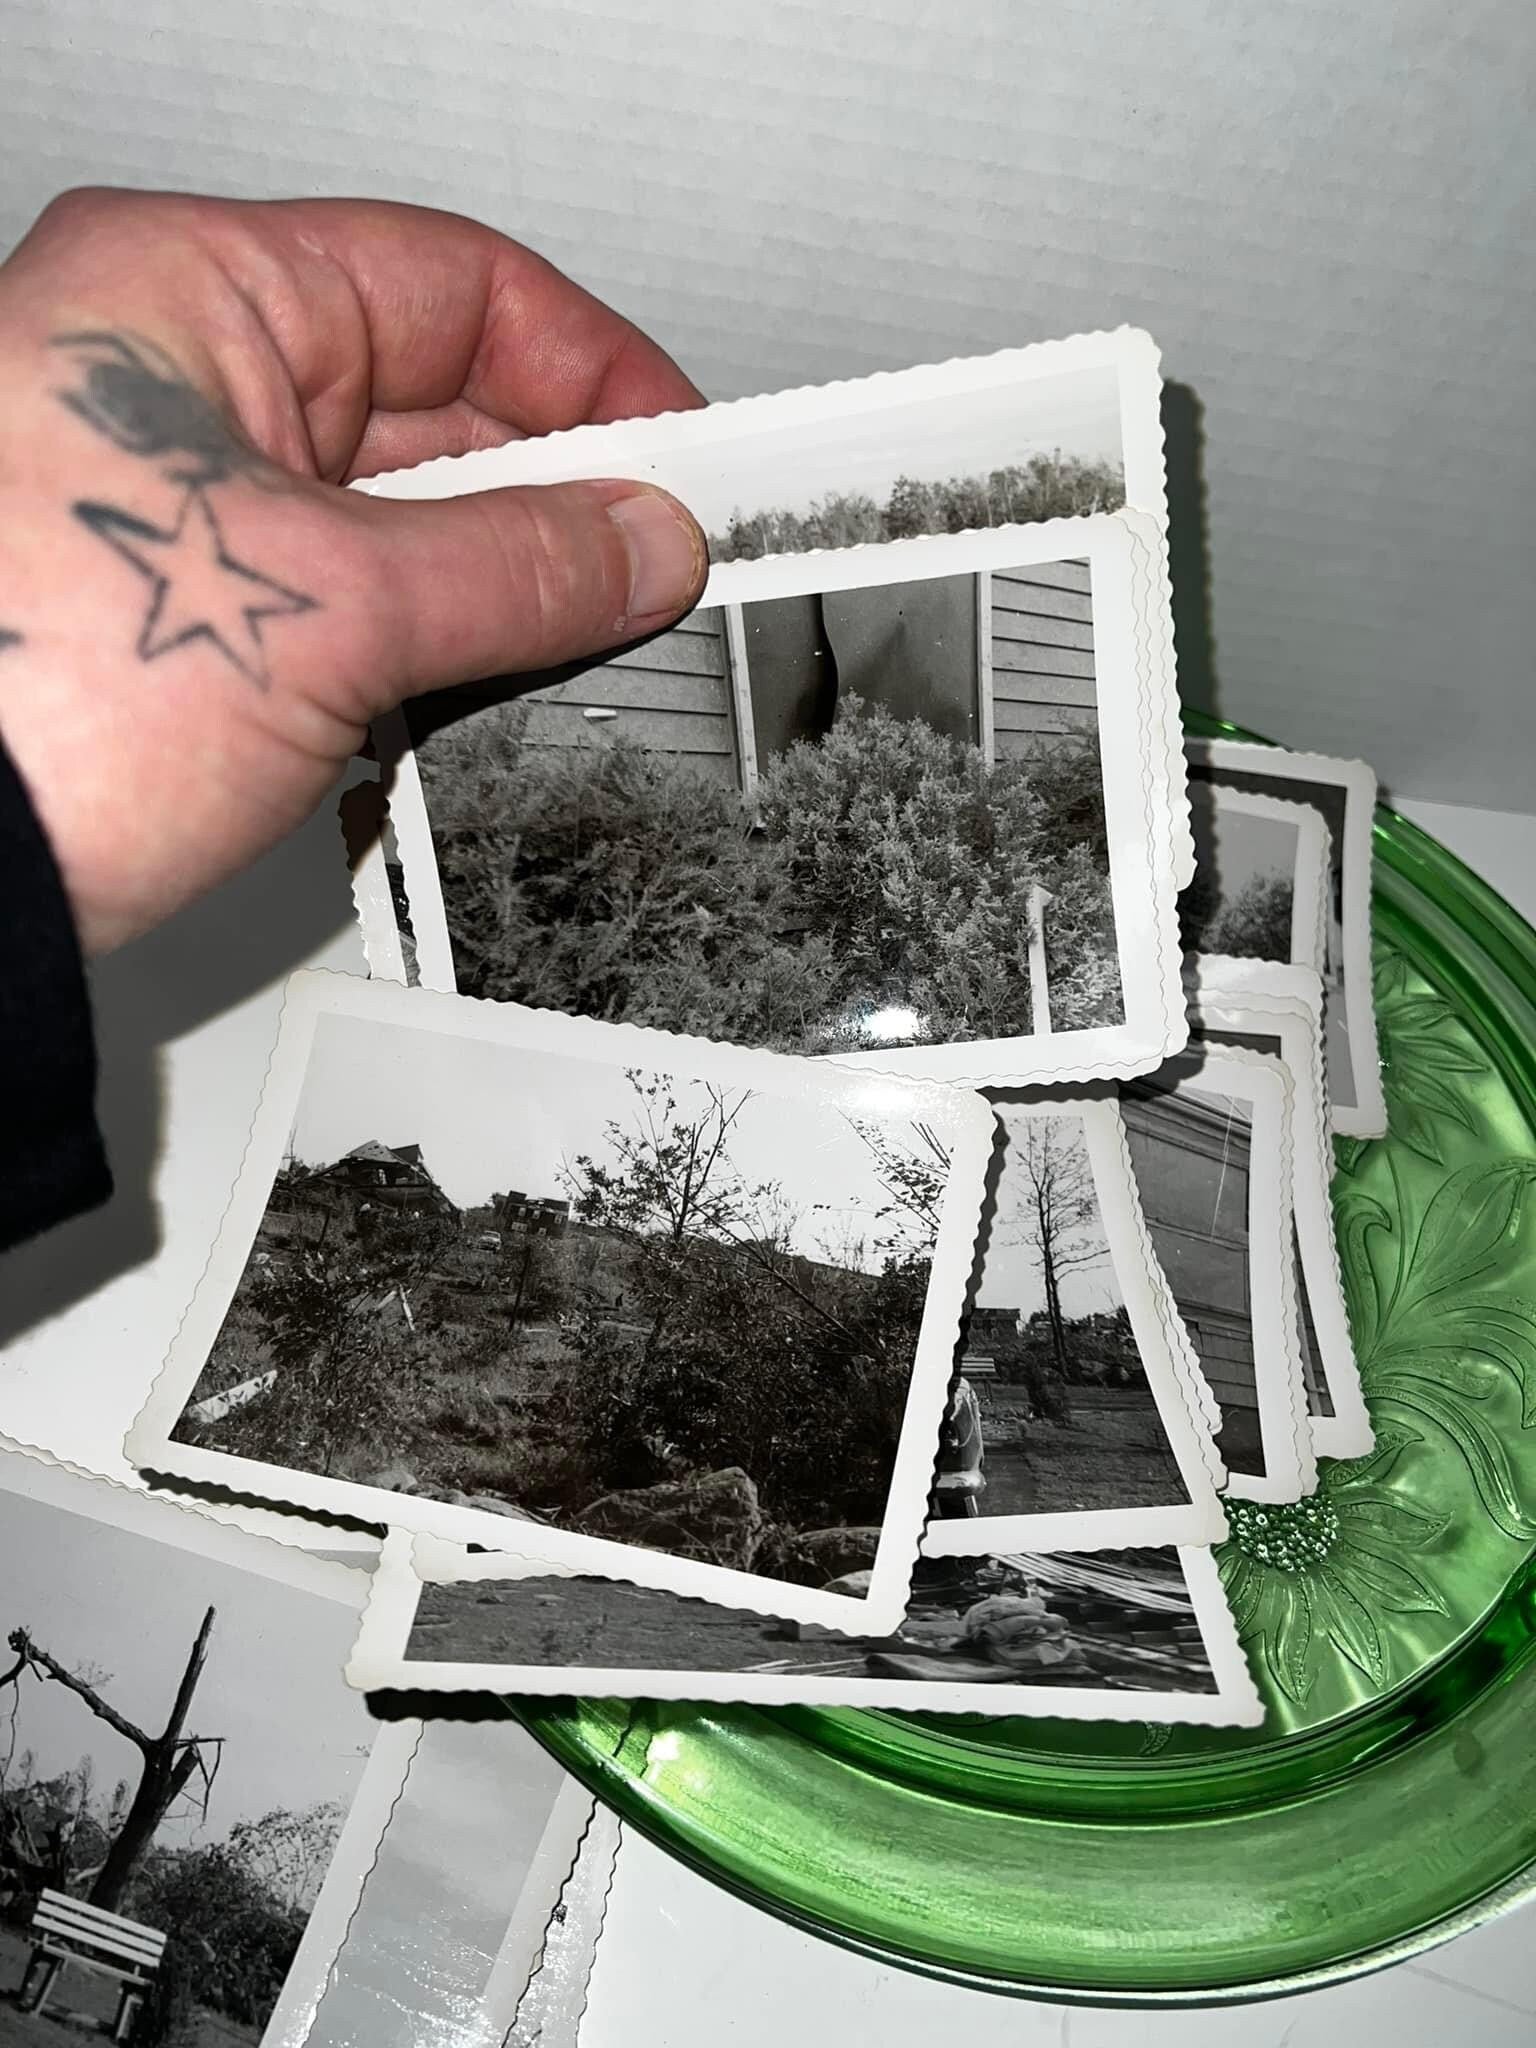 Vintage snapshots tornado destruction Worcester Massachusetts 1953 39 photos photography